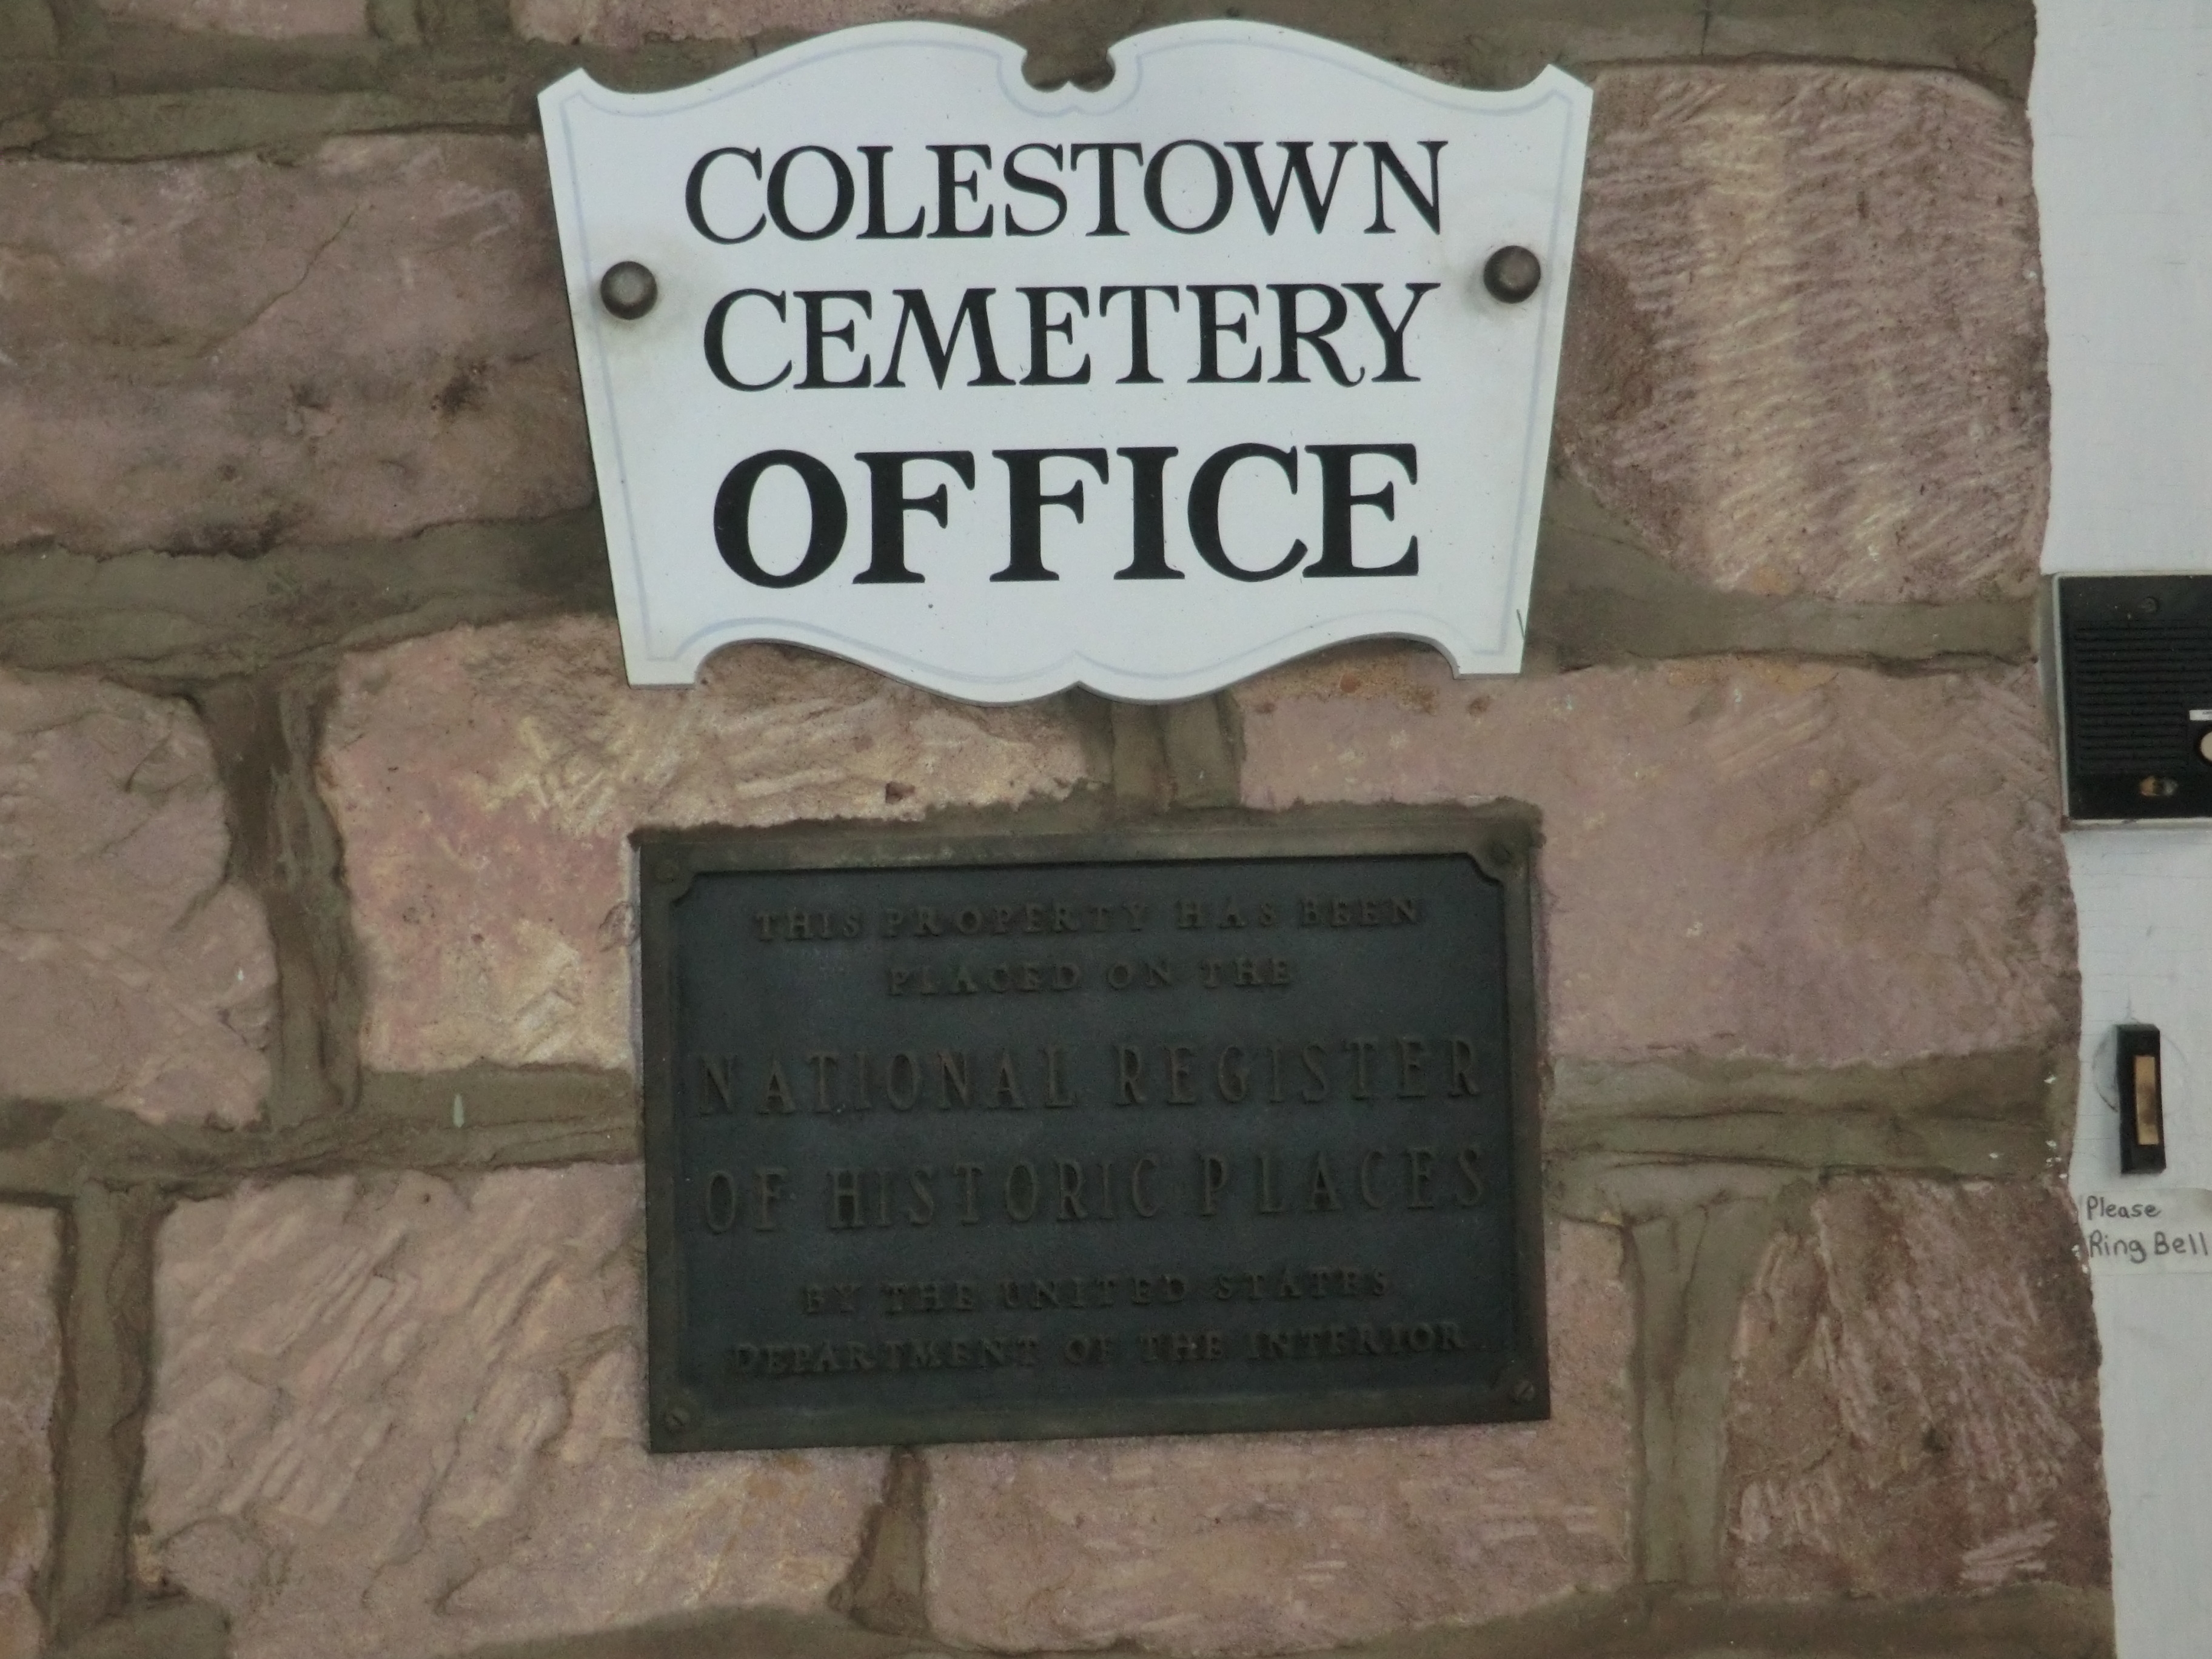 Colestown Cemetery Office Marker